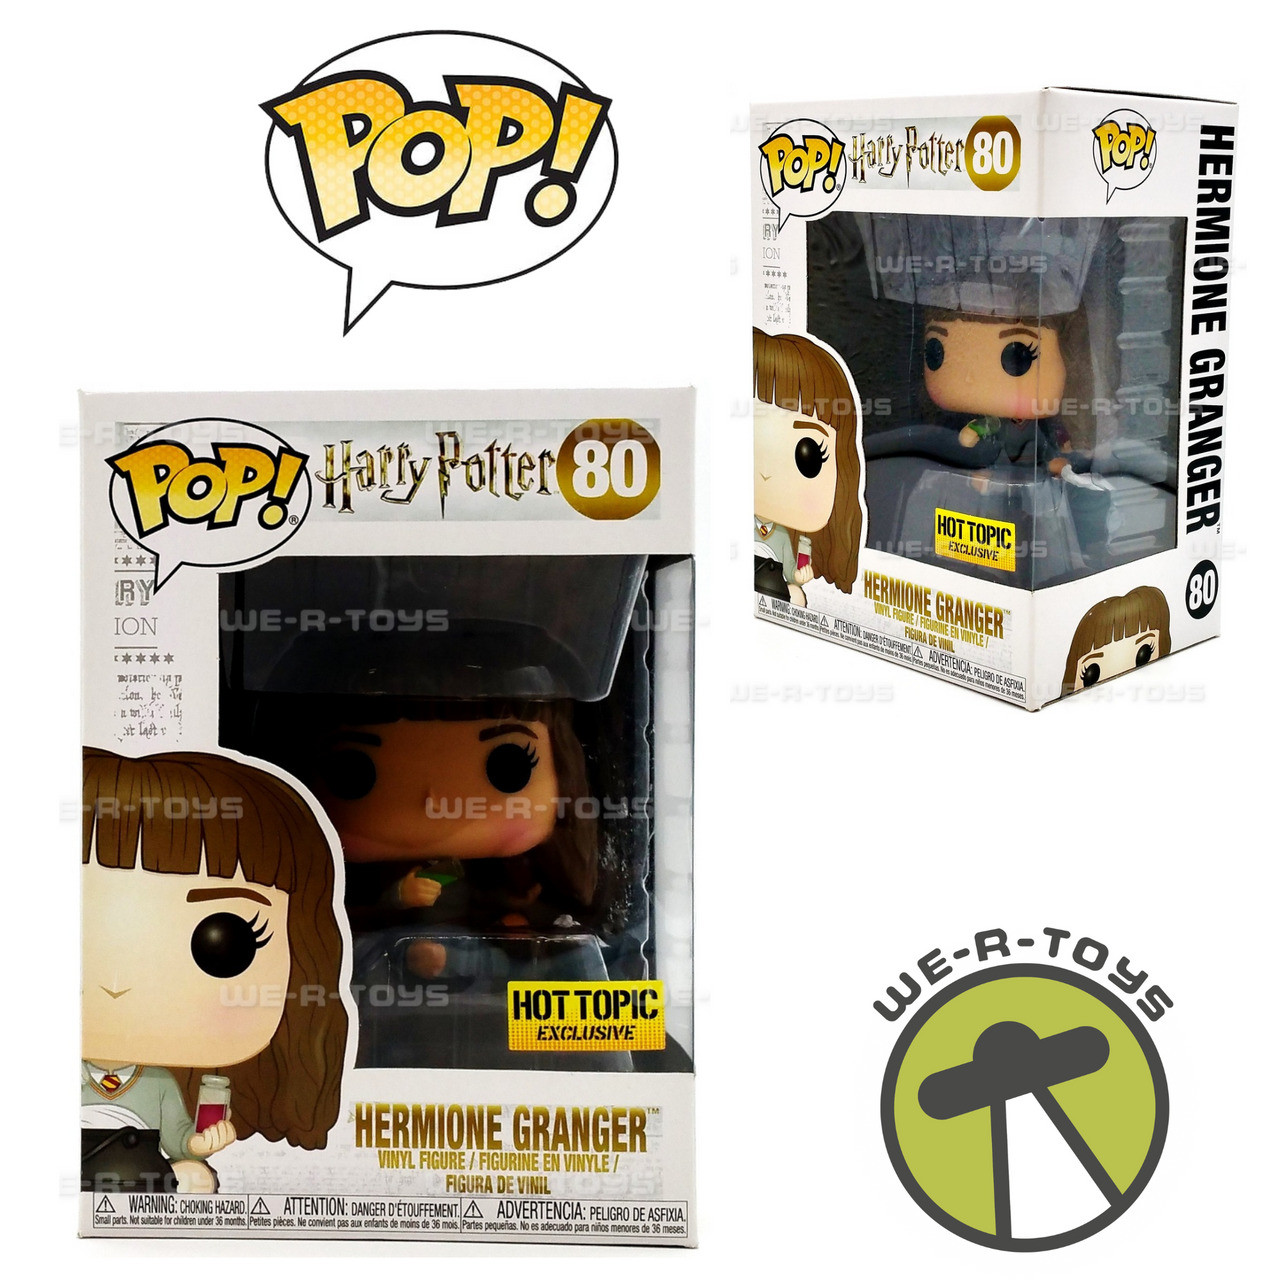 Harry Potter - Funko - Figurine vinyle Rock Candy - Hermione Granger